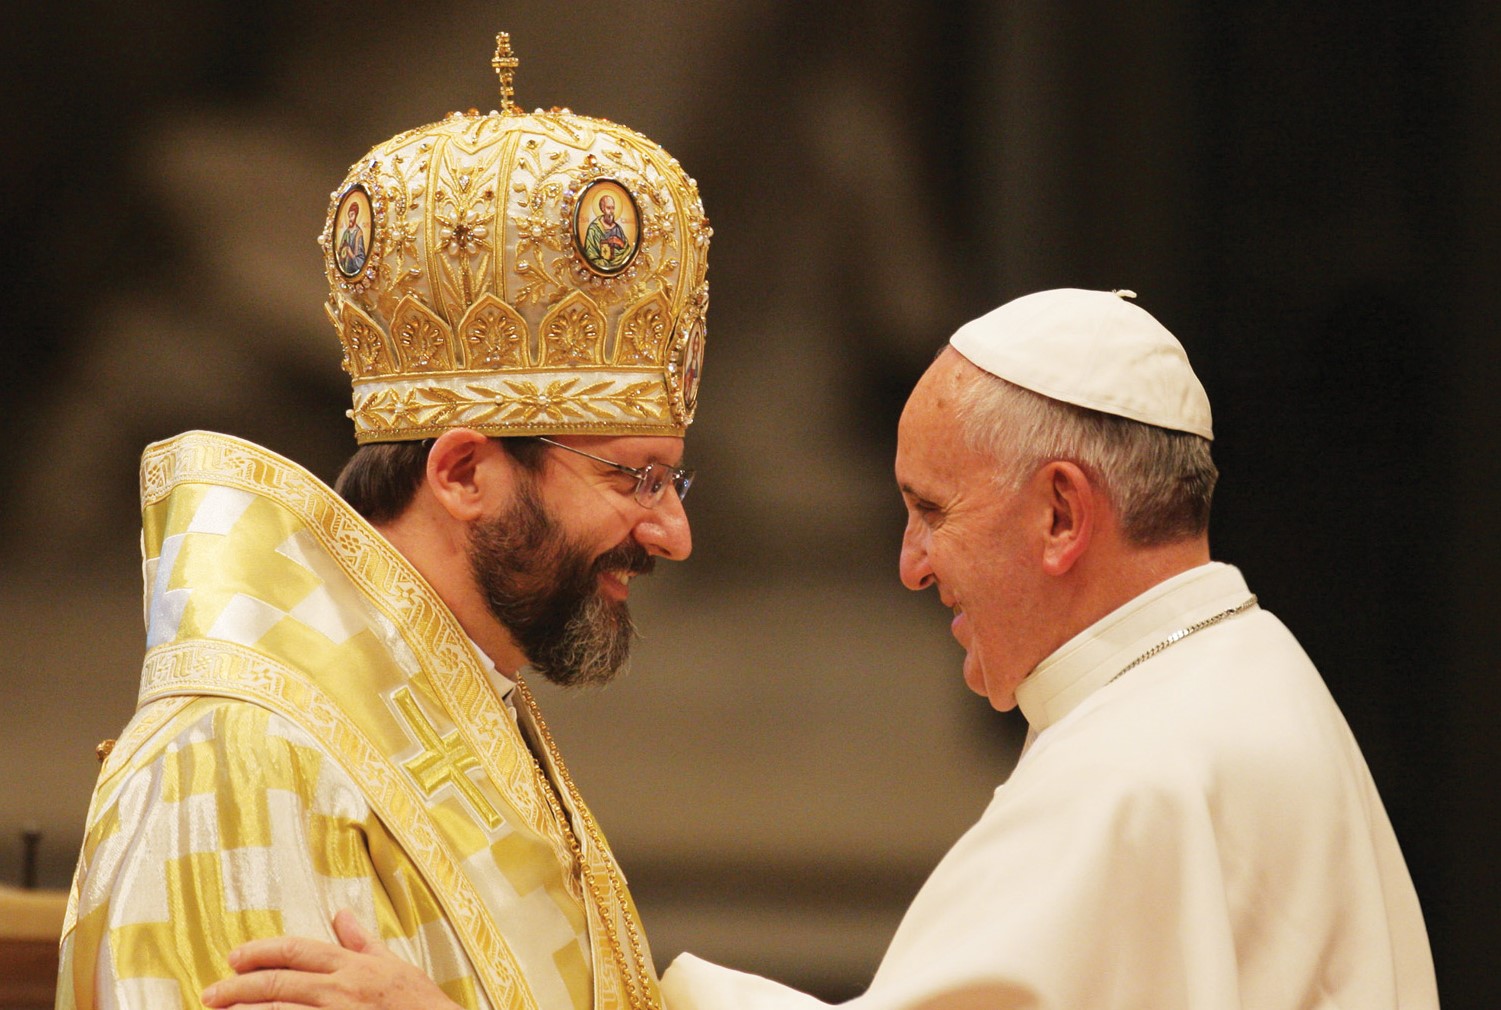 Униатский епископ Станислав Шевчук и папа Римский Франциск